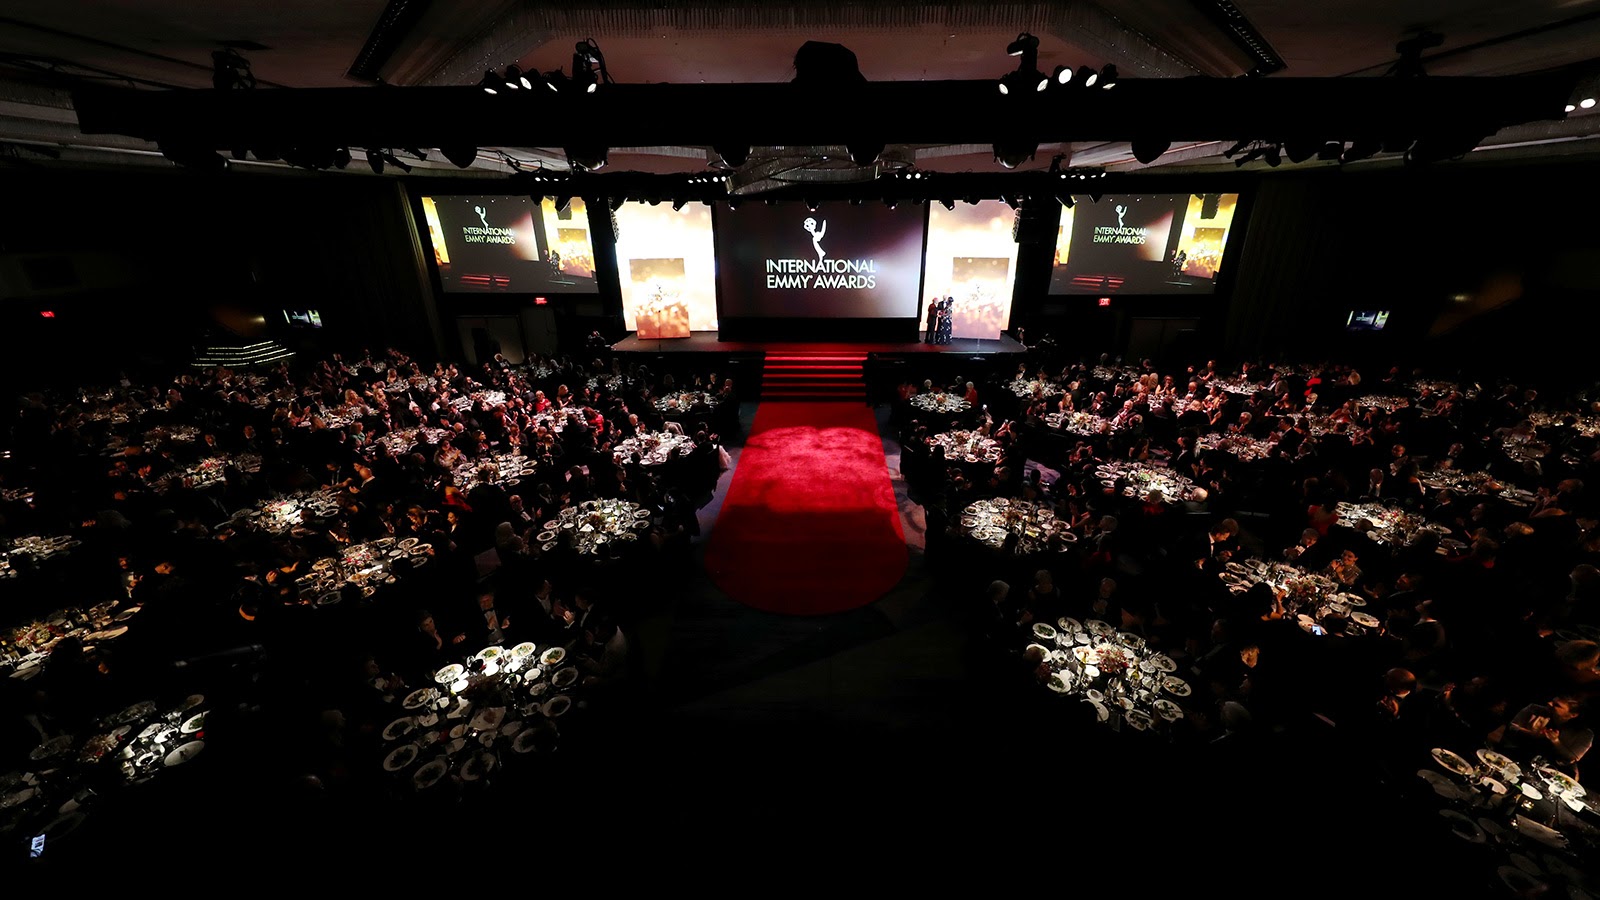 International Emmy Awards ballroom